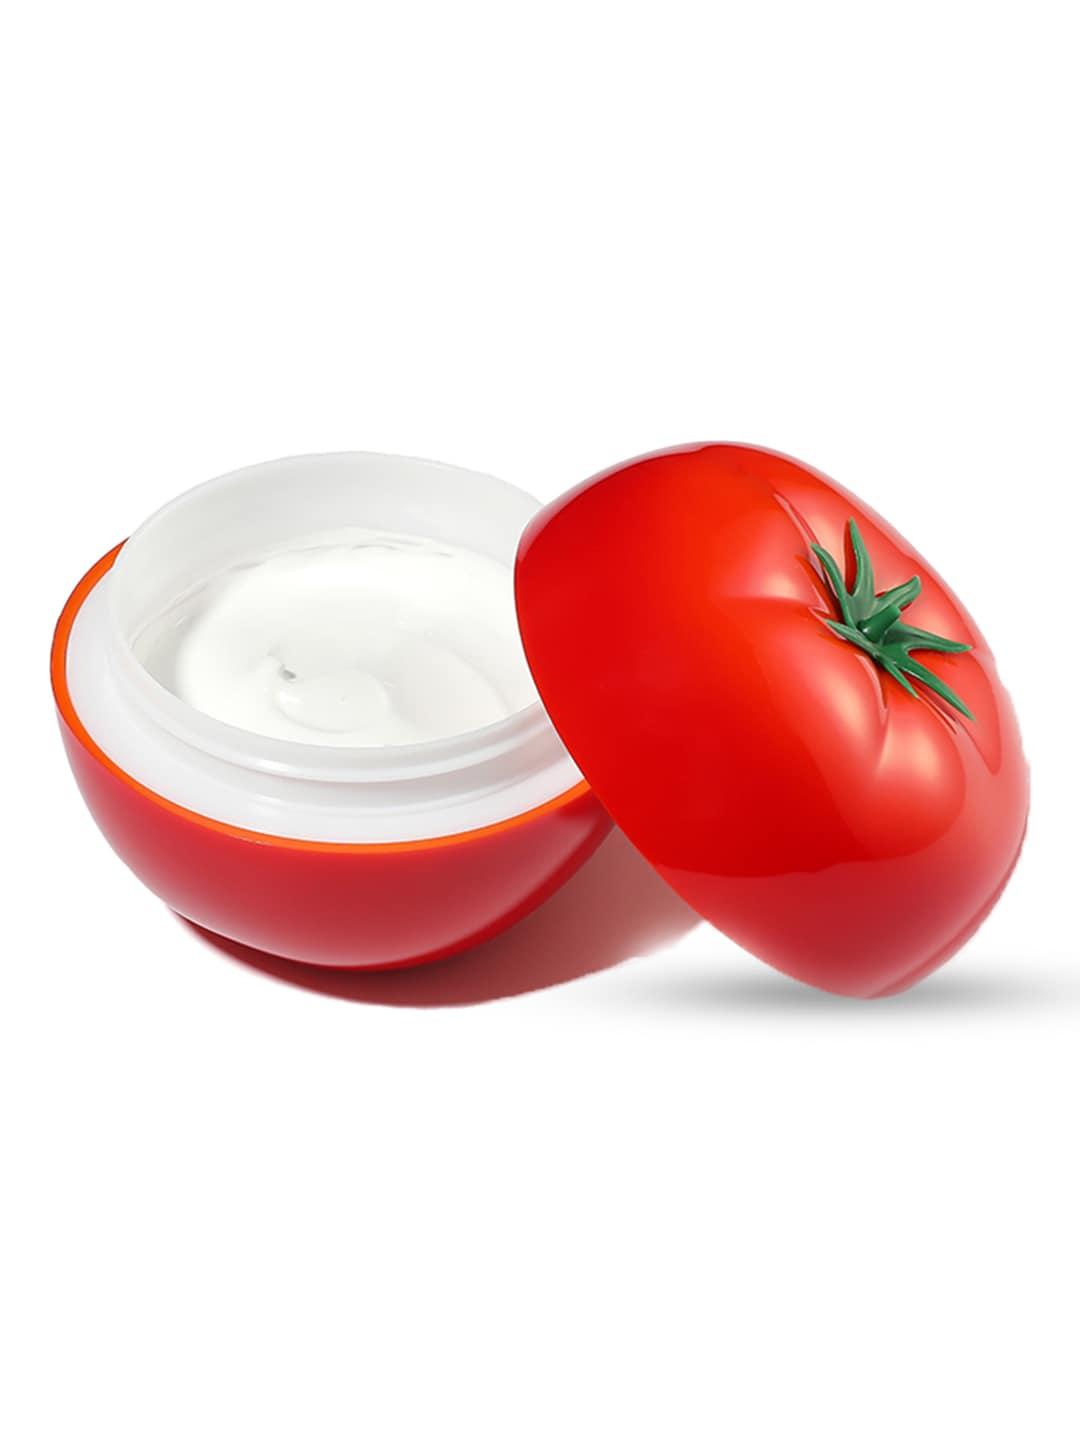 TONYMOLY Tomatox Magic Massage Pack with Centella Asiatica Extract - 80 g